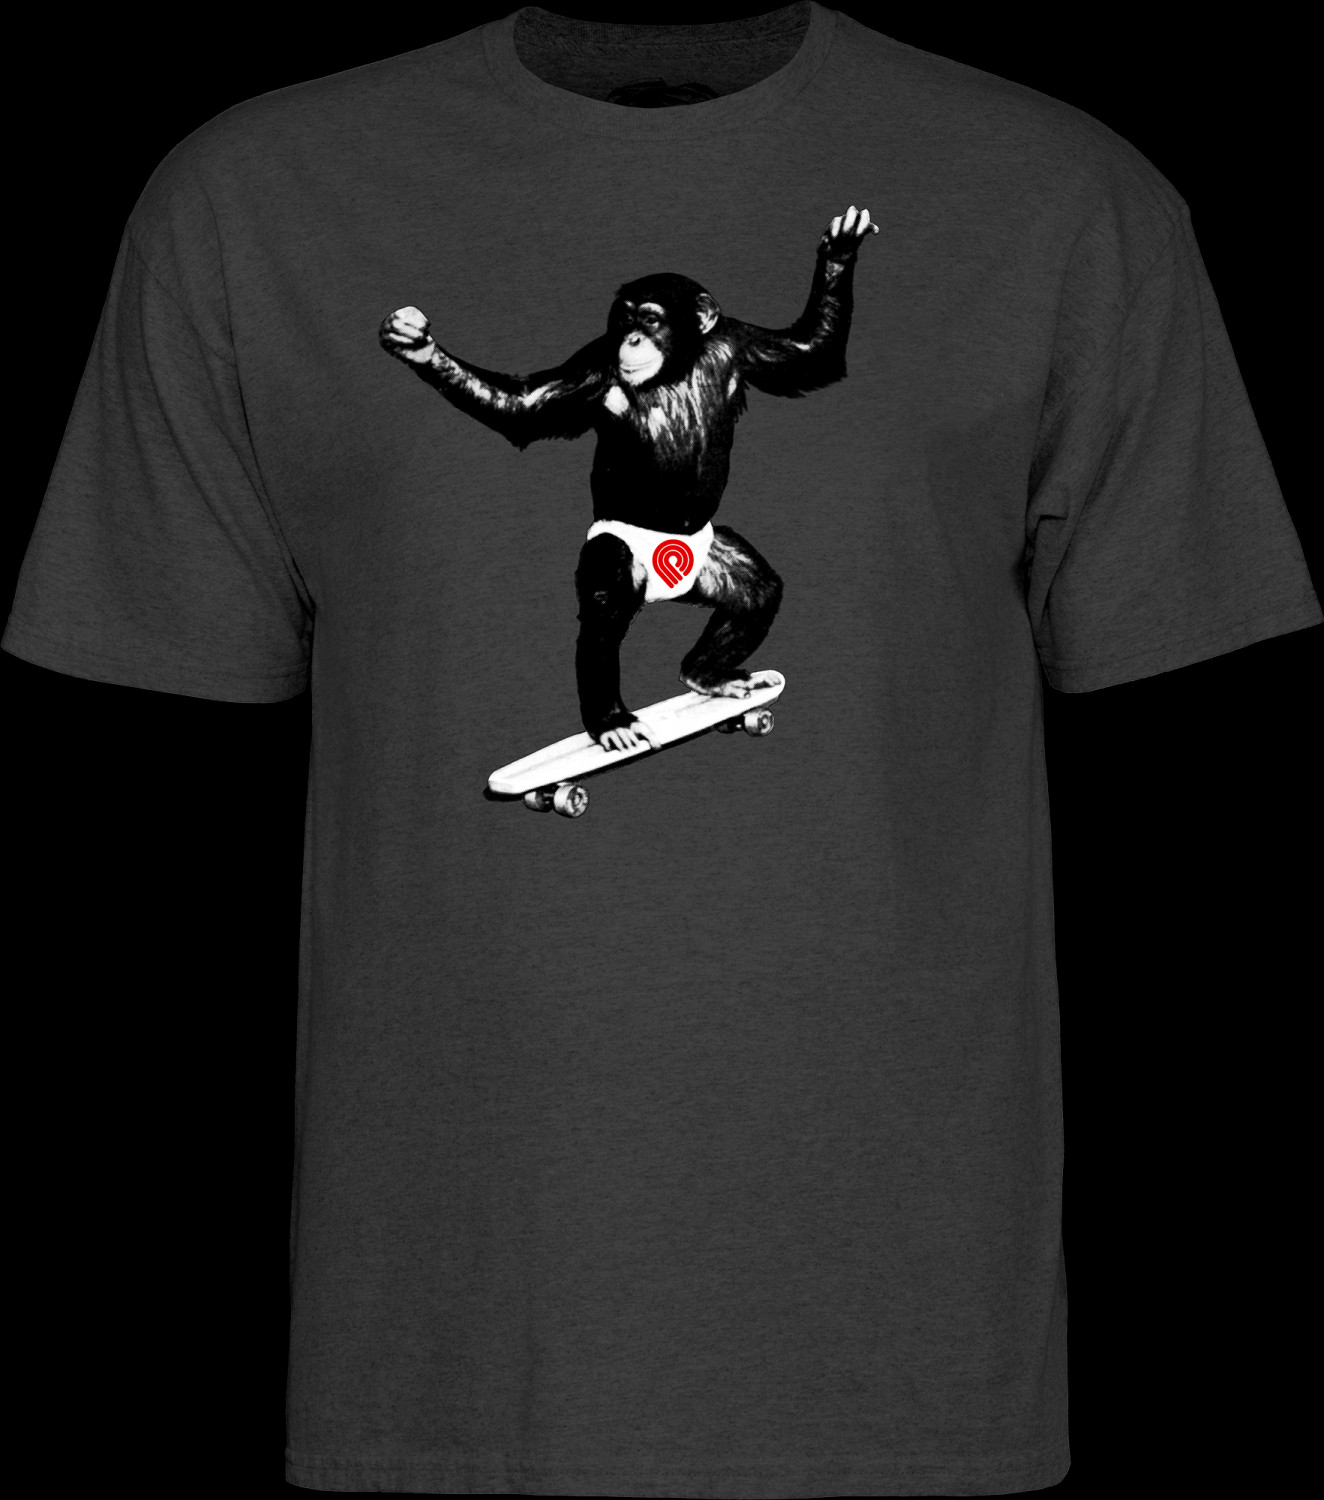 Powell Peralta Skate Chimp T-Shirt Charcoal Heather Photo #1 - Photo ...